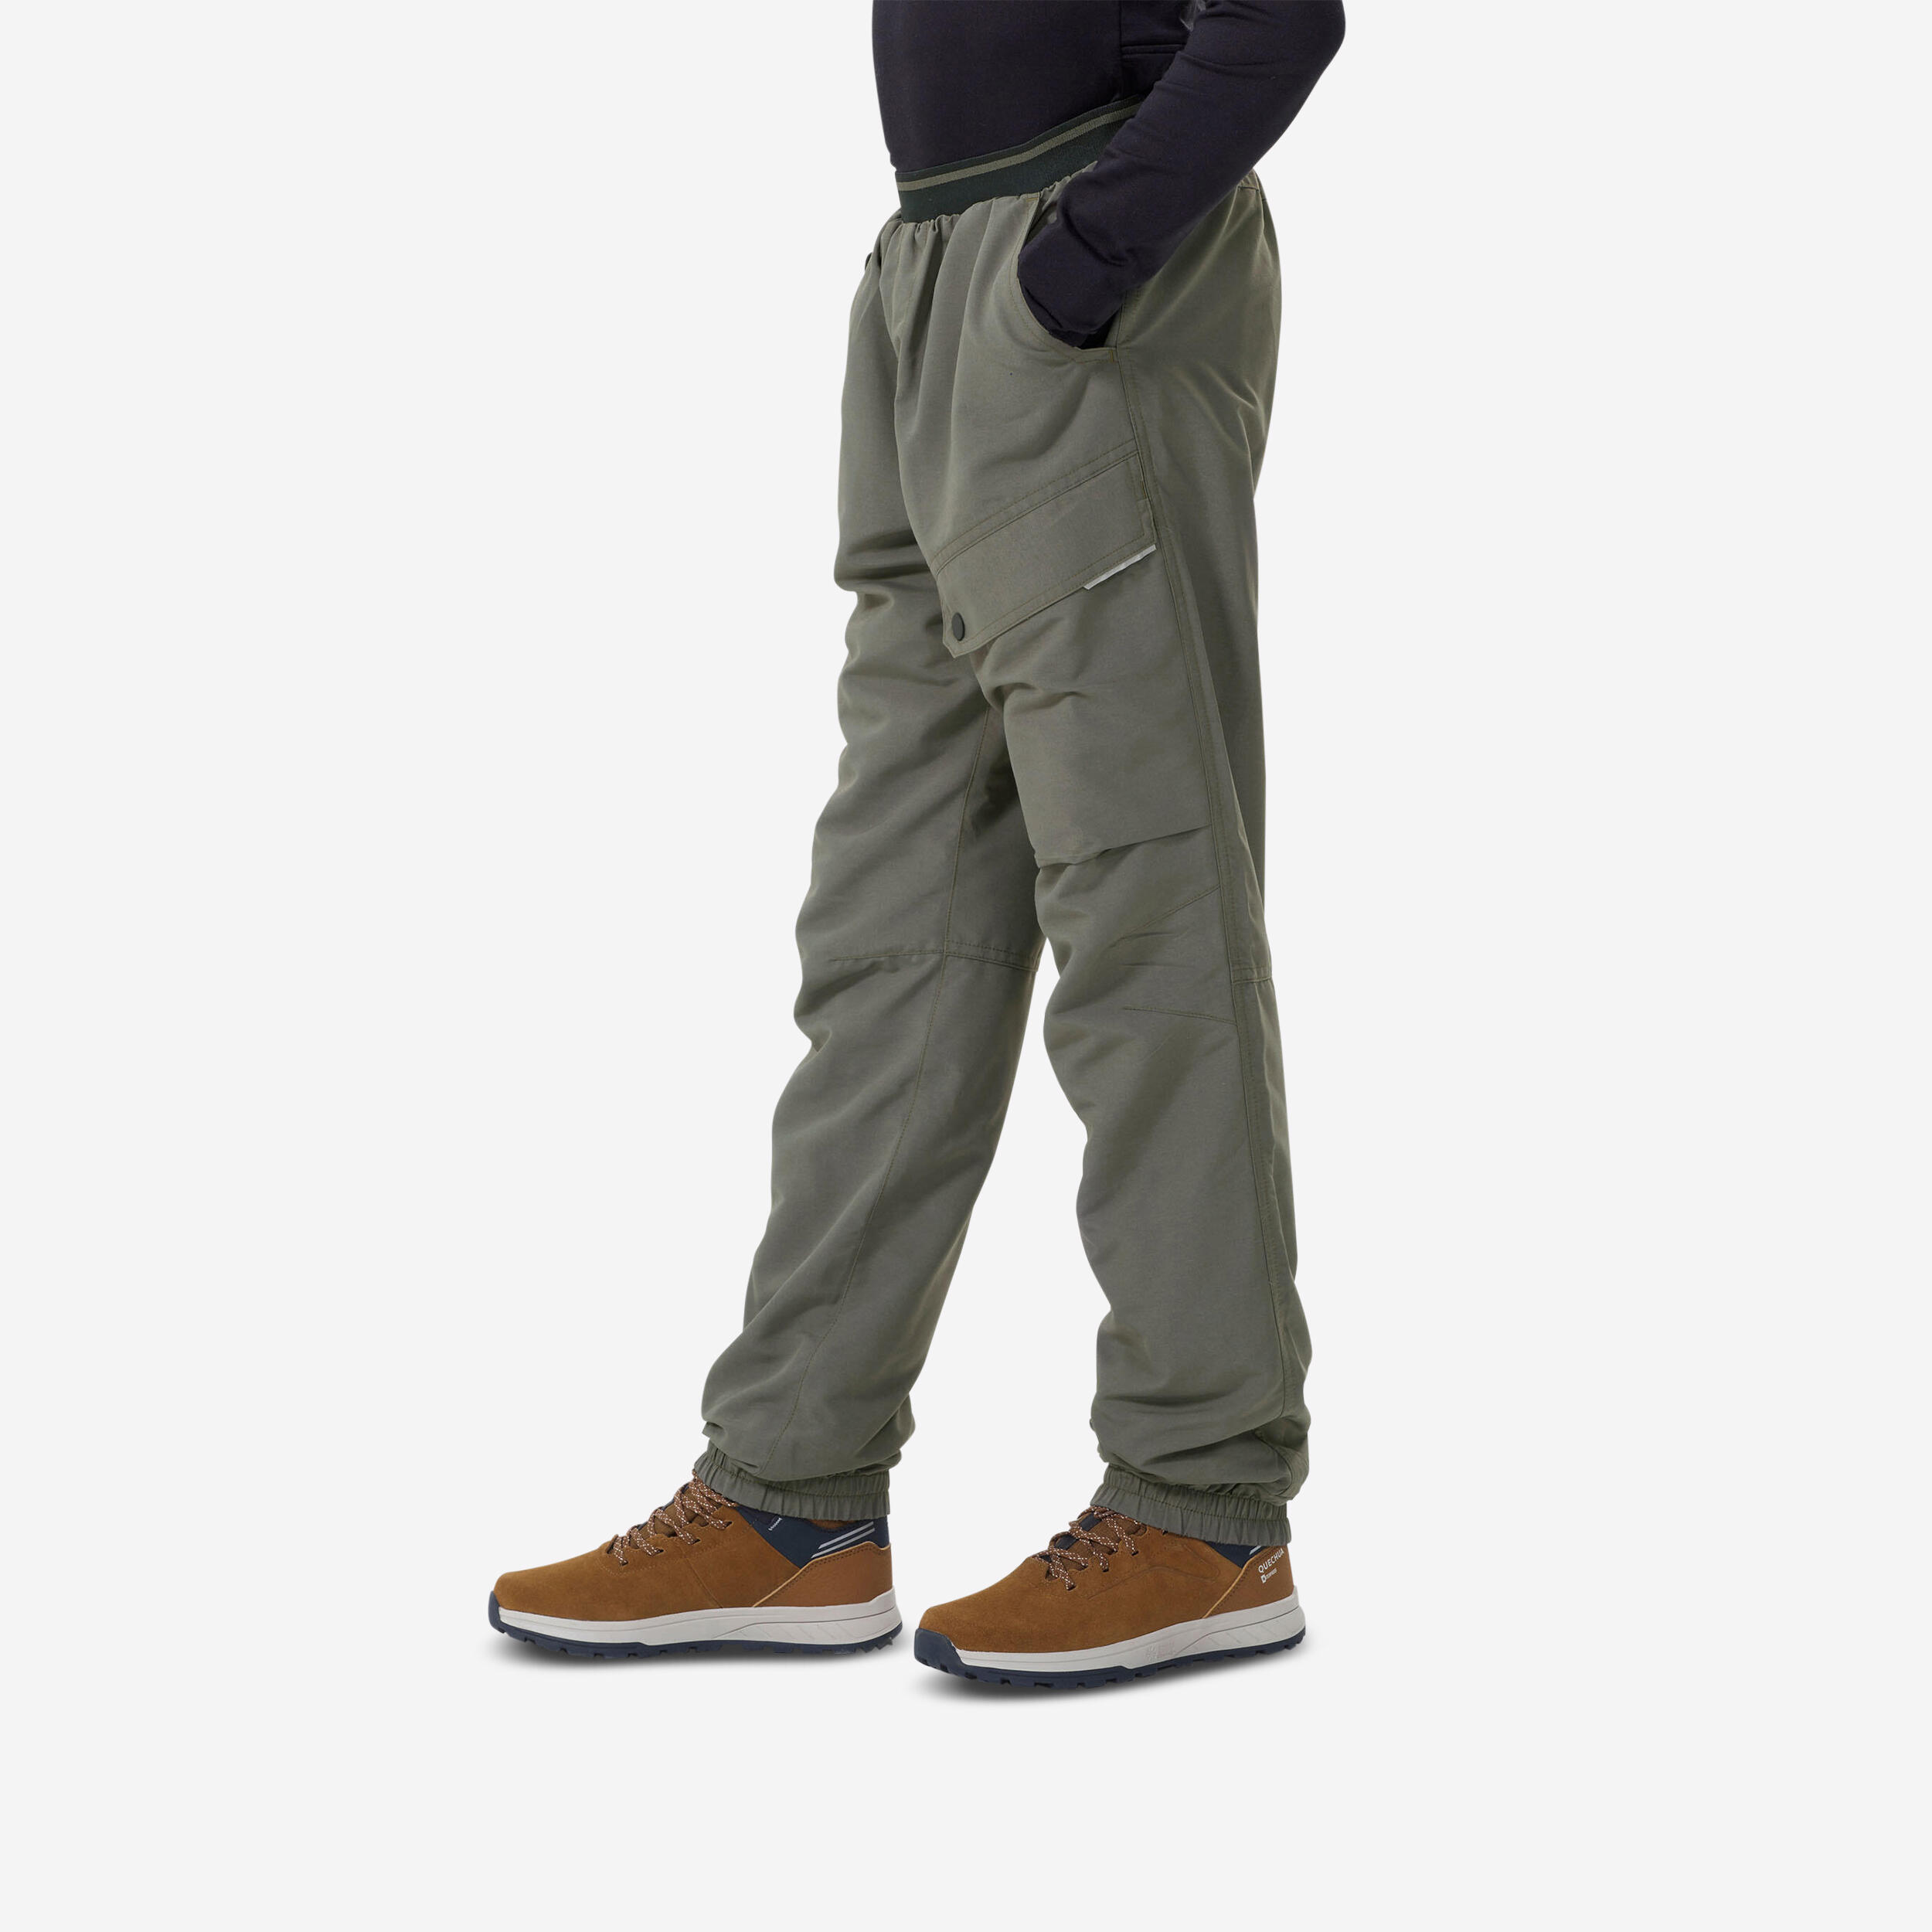 Men's Multi Pocket Cargo Pants Outdoor Hiking Sport Pants Combat Trousers  Casual | eBay